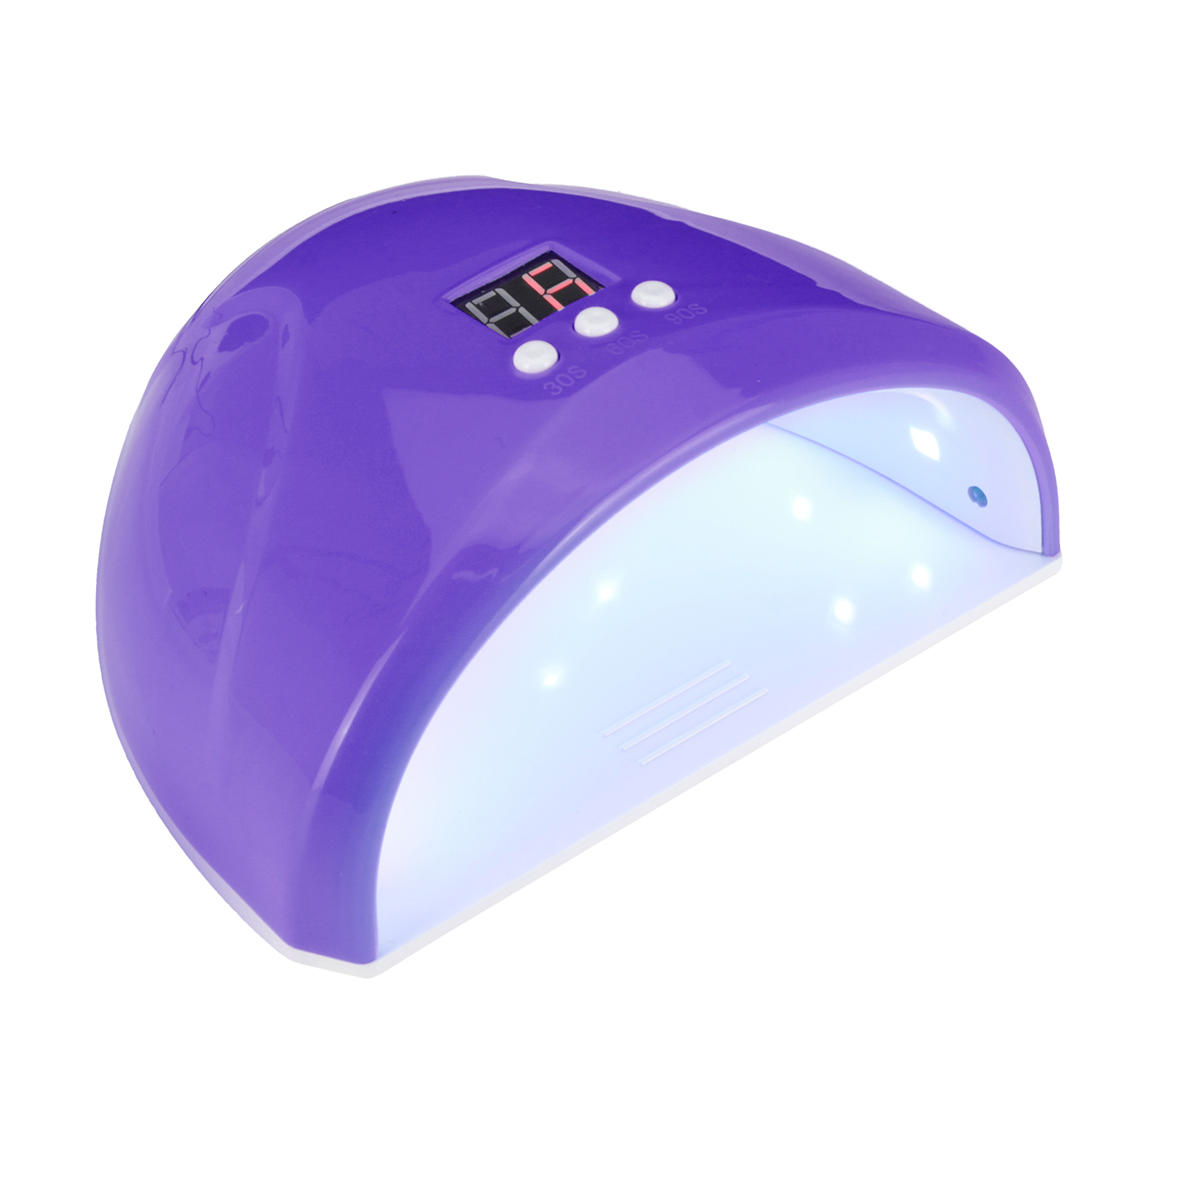 

36W 12 LED UV / Sunlight Ногти Сушилка Лампа Гель Польский маникюр для сушки Ногти Сушилка Датчик